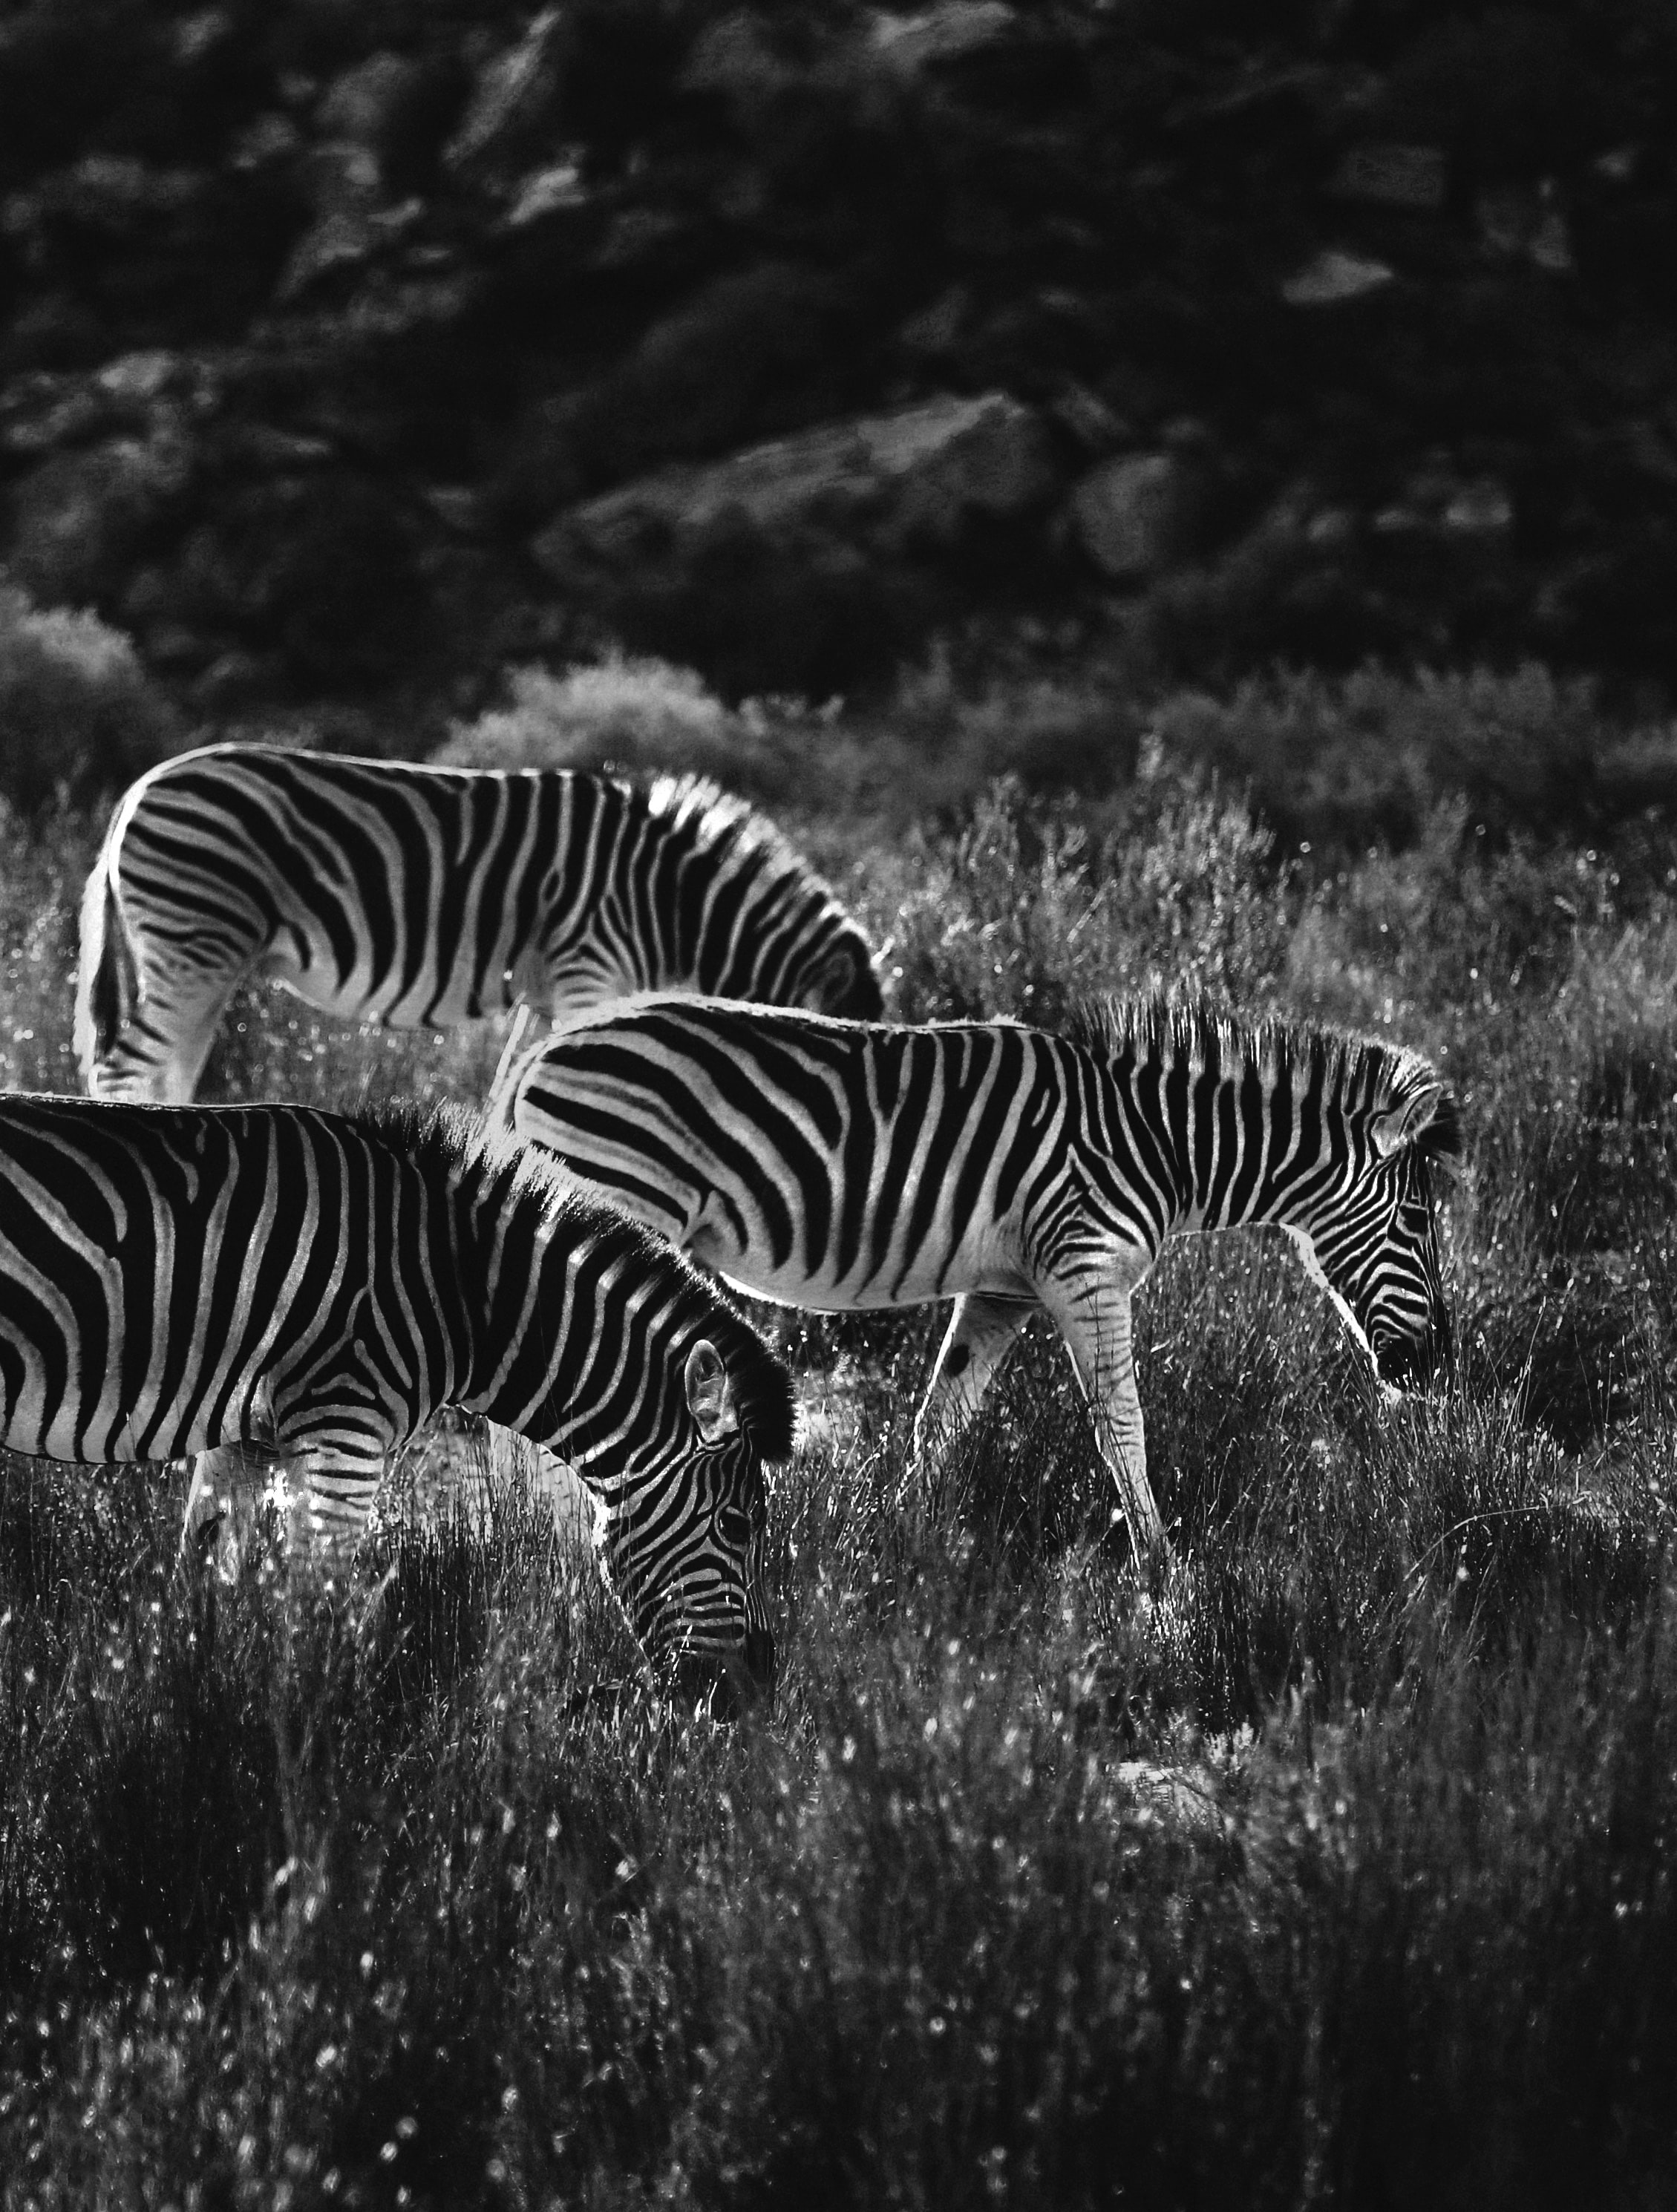 Zebra Hd Wallpaper Image Free Download Photos